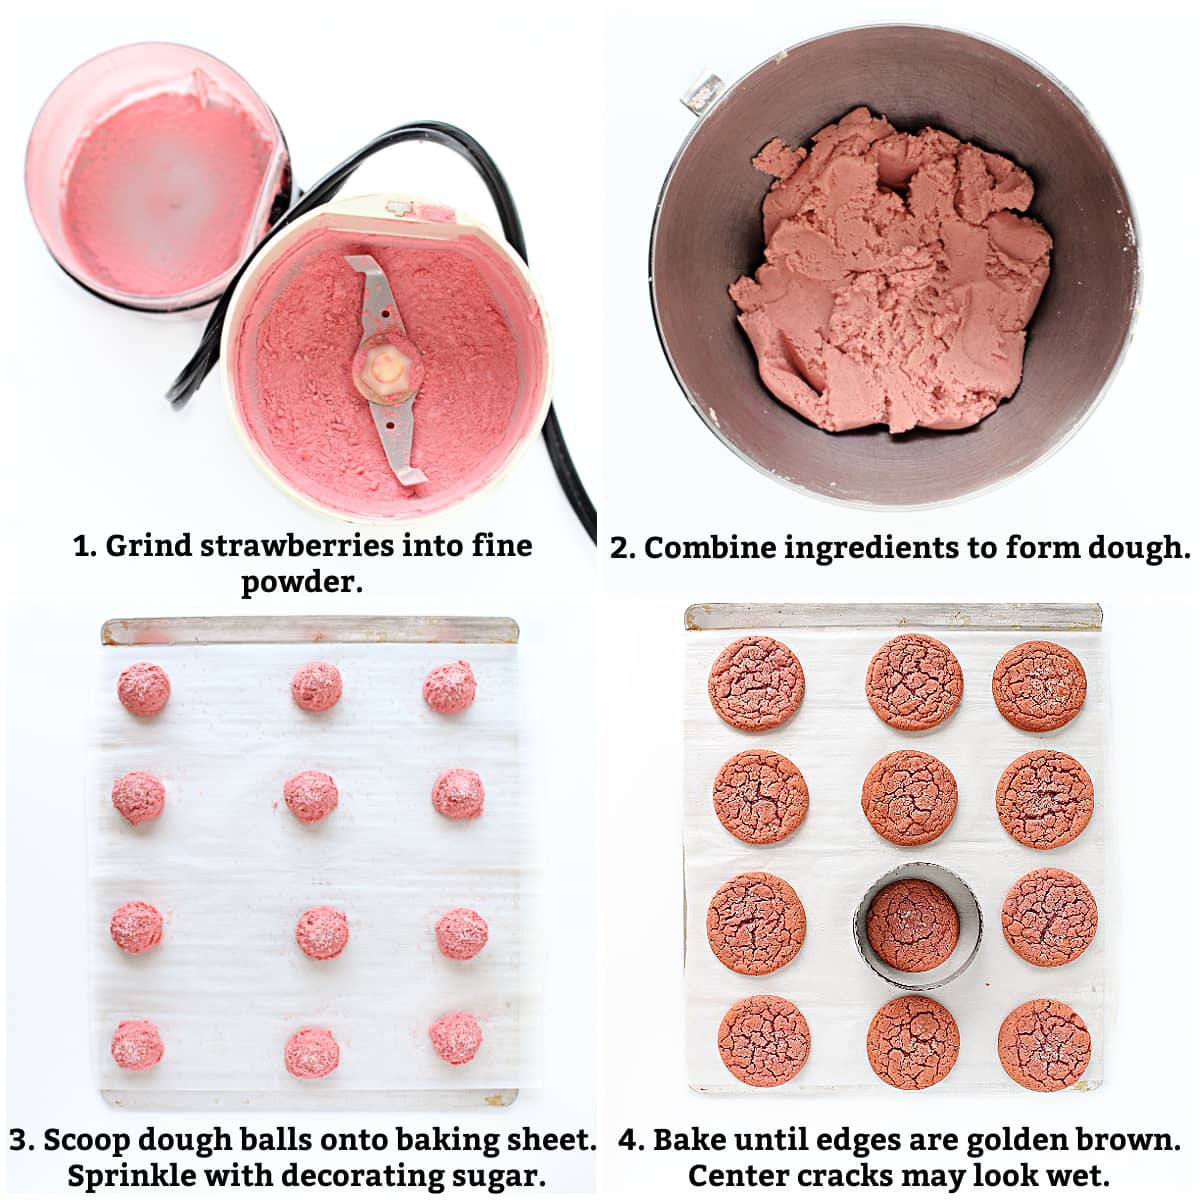 Instructions: grind dried strawberries, combine ingredients for dough, scoop balls onto baking sheet, sprinkle sugar, bake.